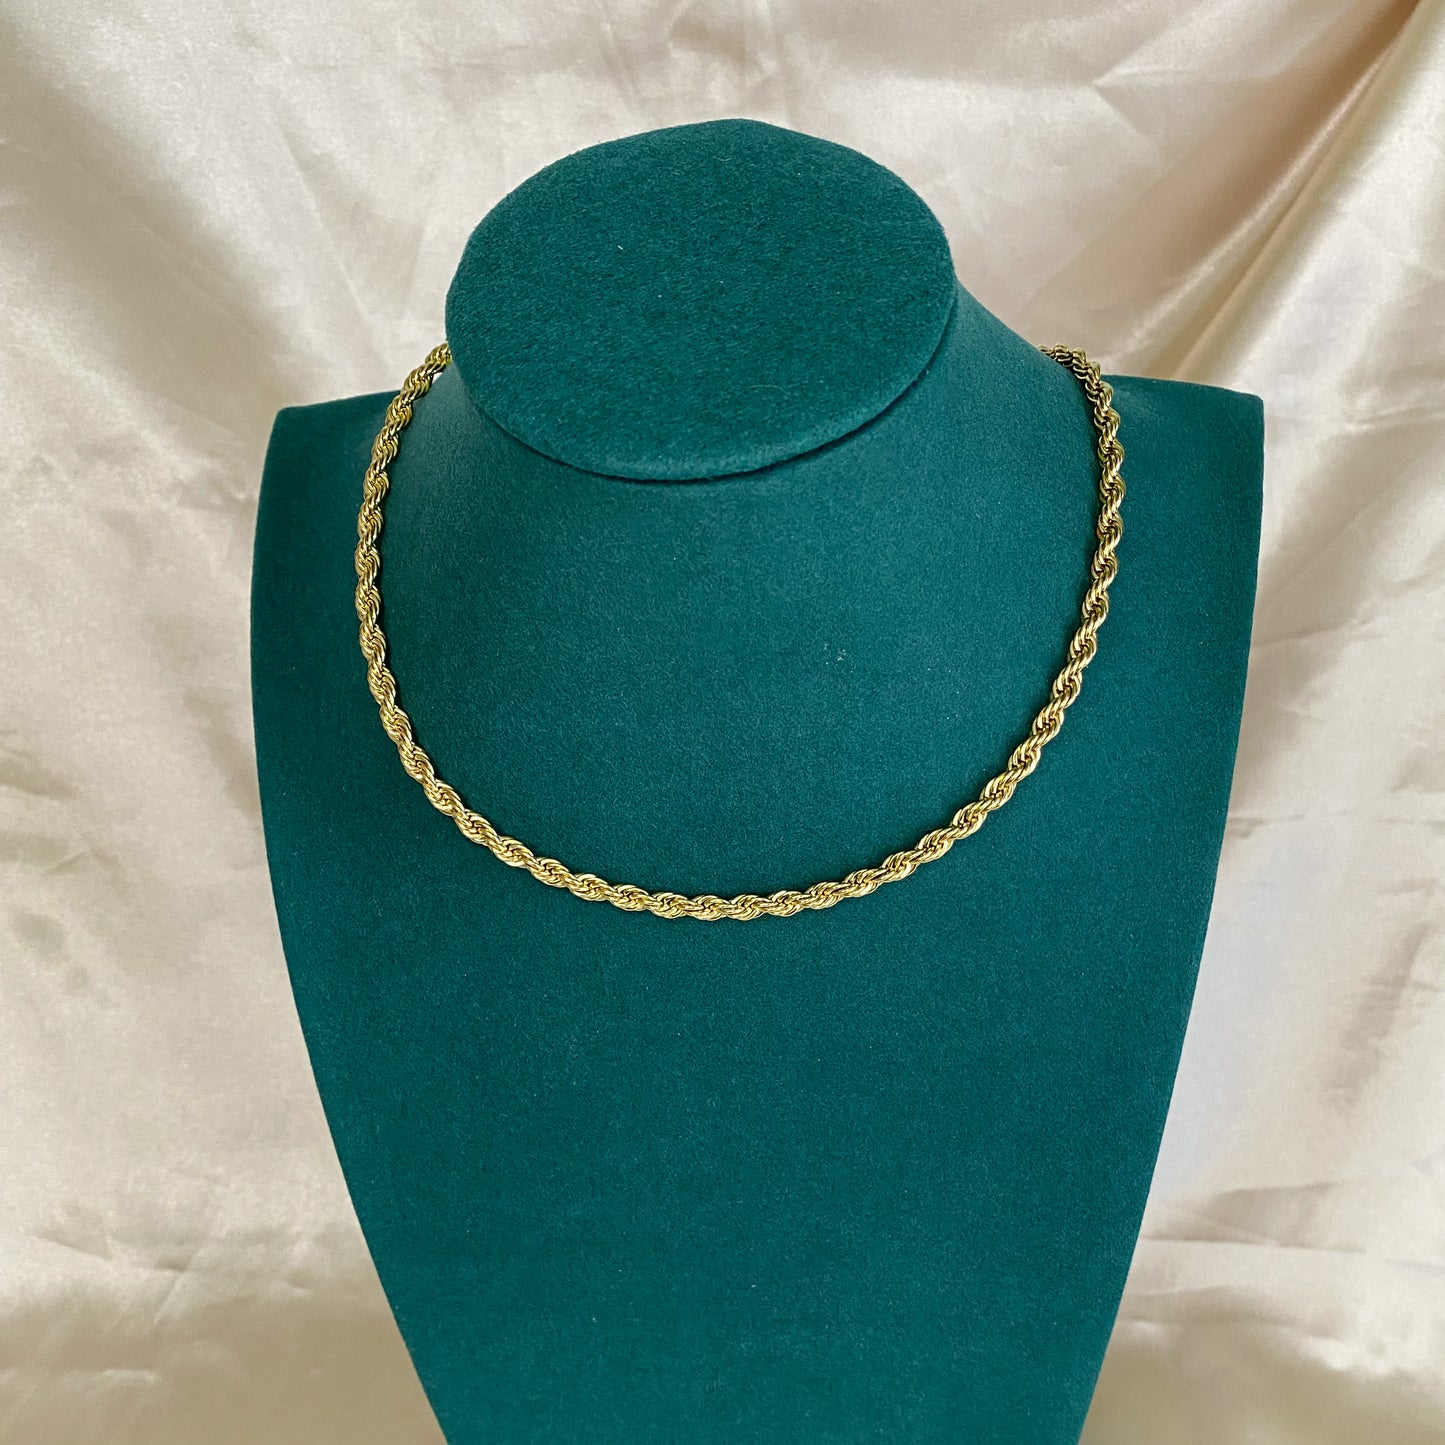 Rosalind necklace